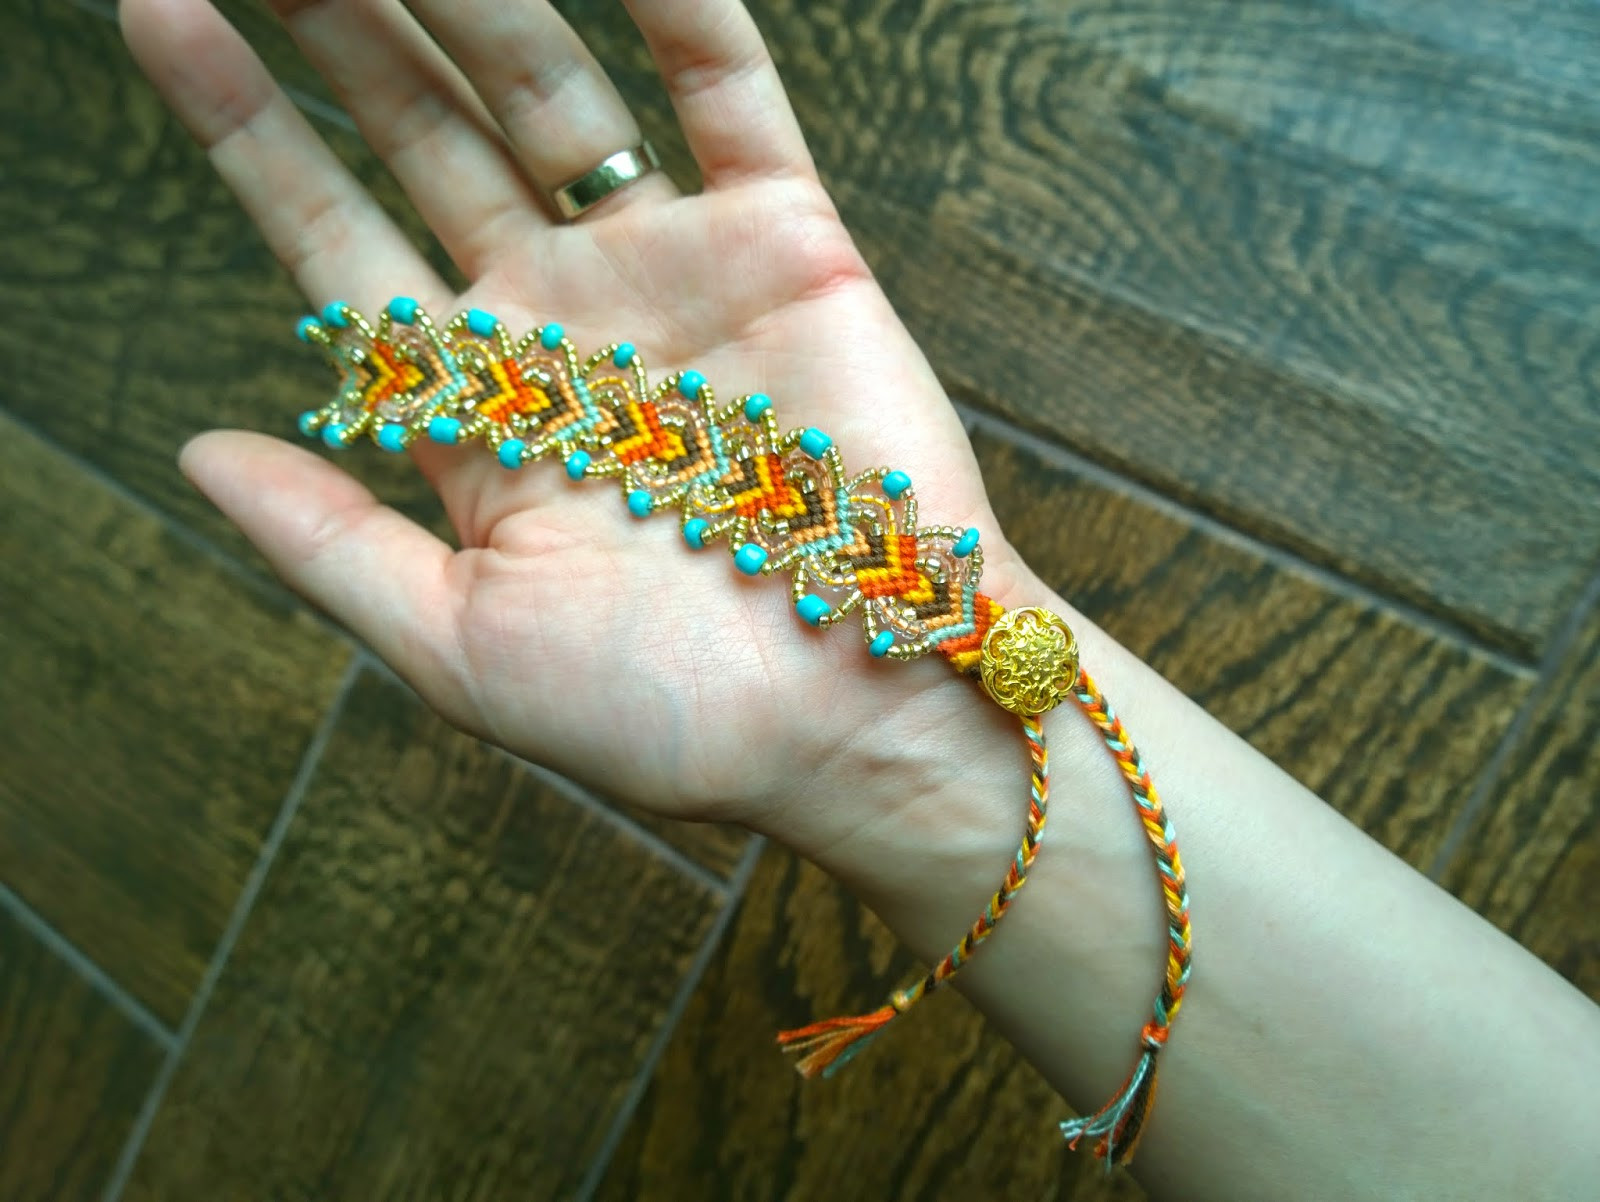 Best ideas about Friendship Bracelets DIY
. Save or Pin Wonderful DIY Pretty Leaf Friendship Bracelets Now.